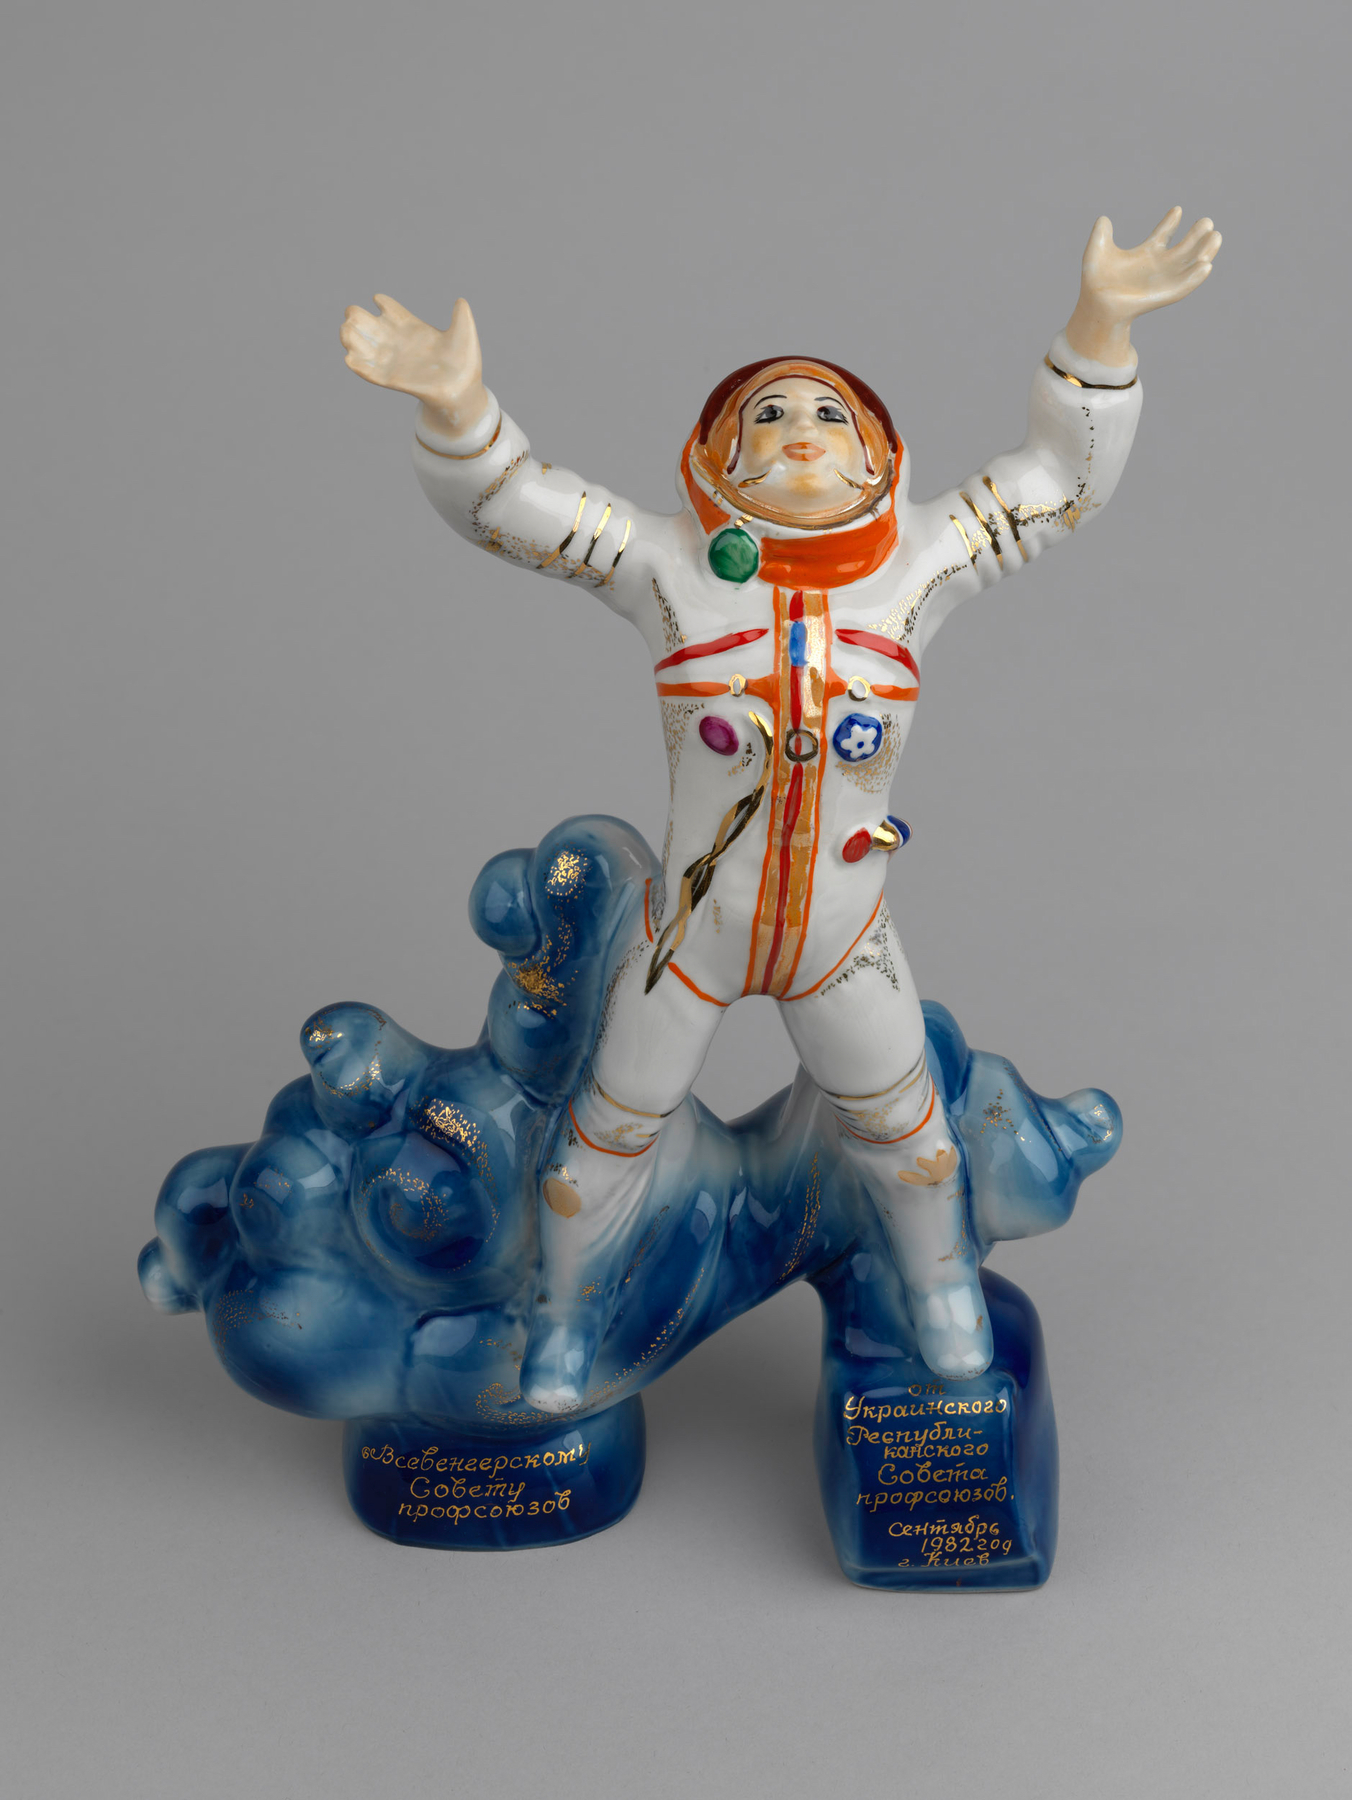 A Porcelain Figure of Valentina Tereshkova